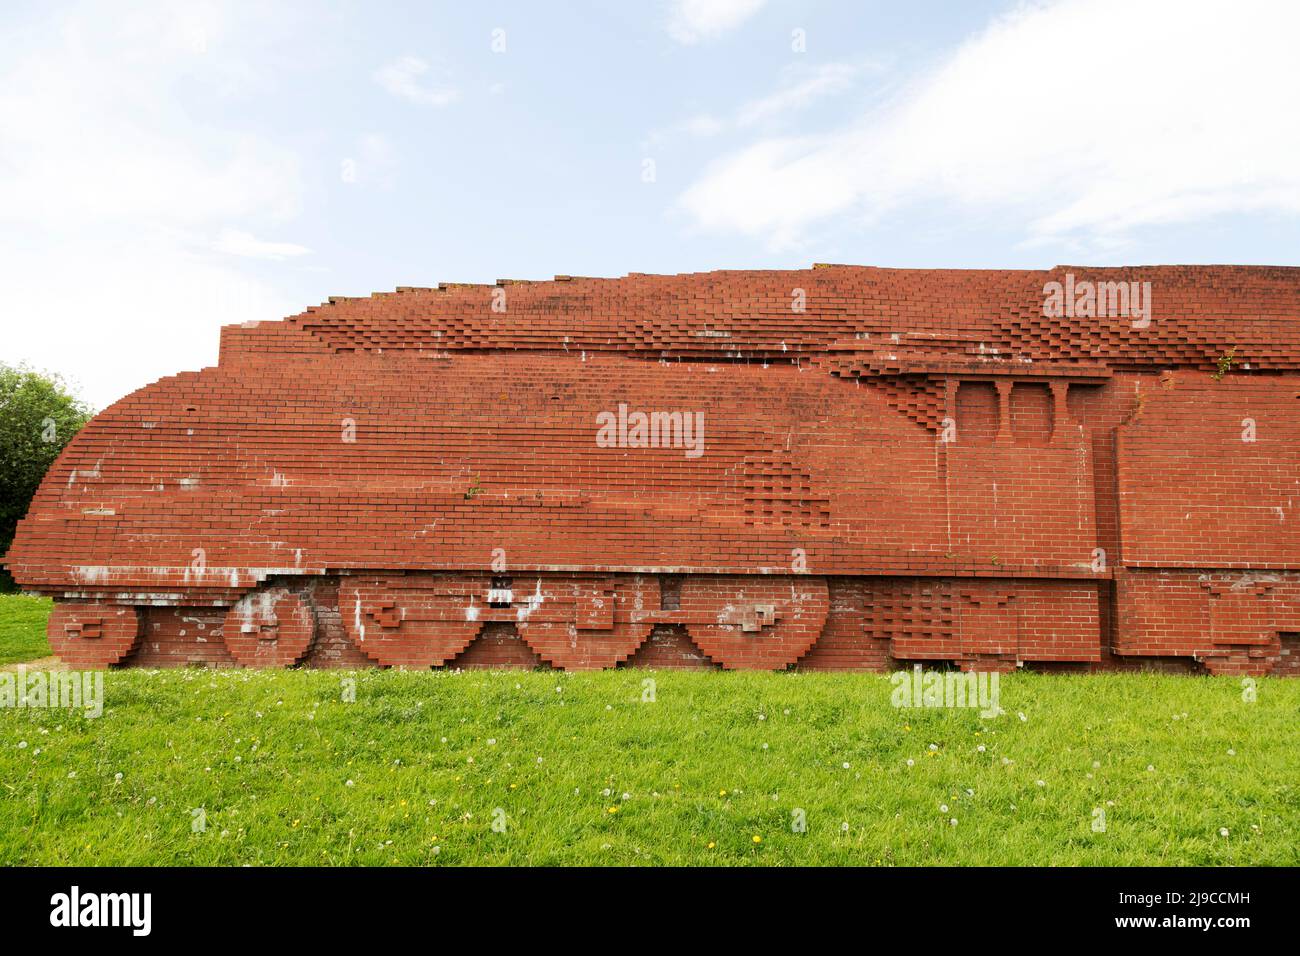 Darlington Brick Train in Darlington, County Durham, England. The brickwork sculpture, depicting a speeding Mallard locomotive, was created by David M Stock Photo